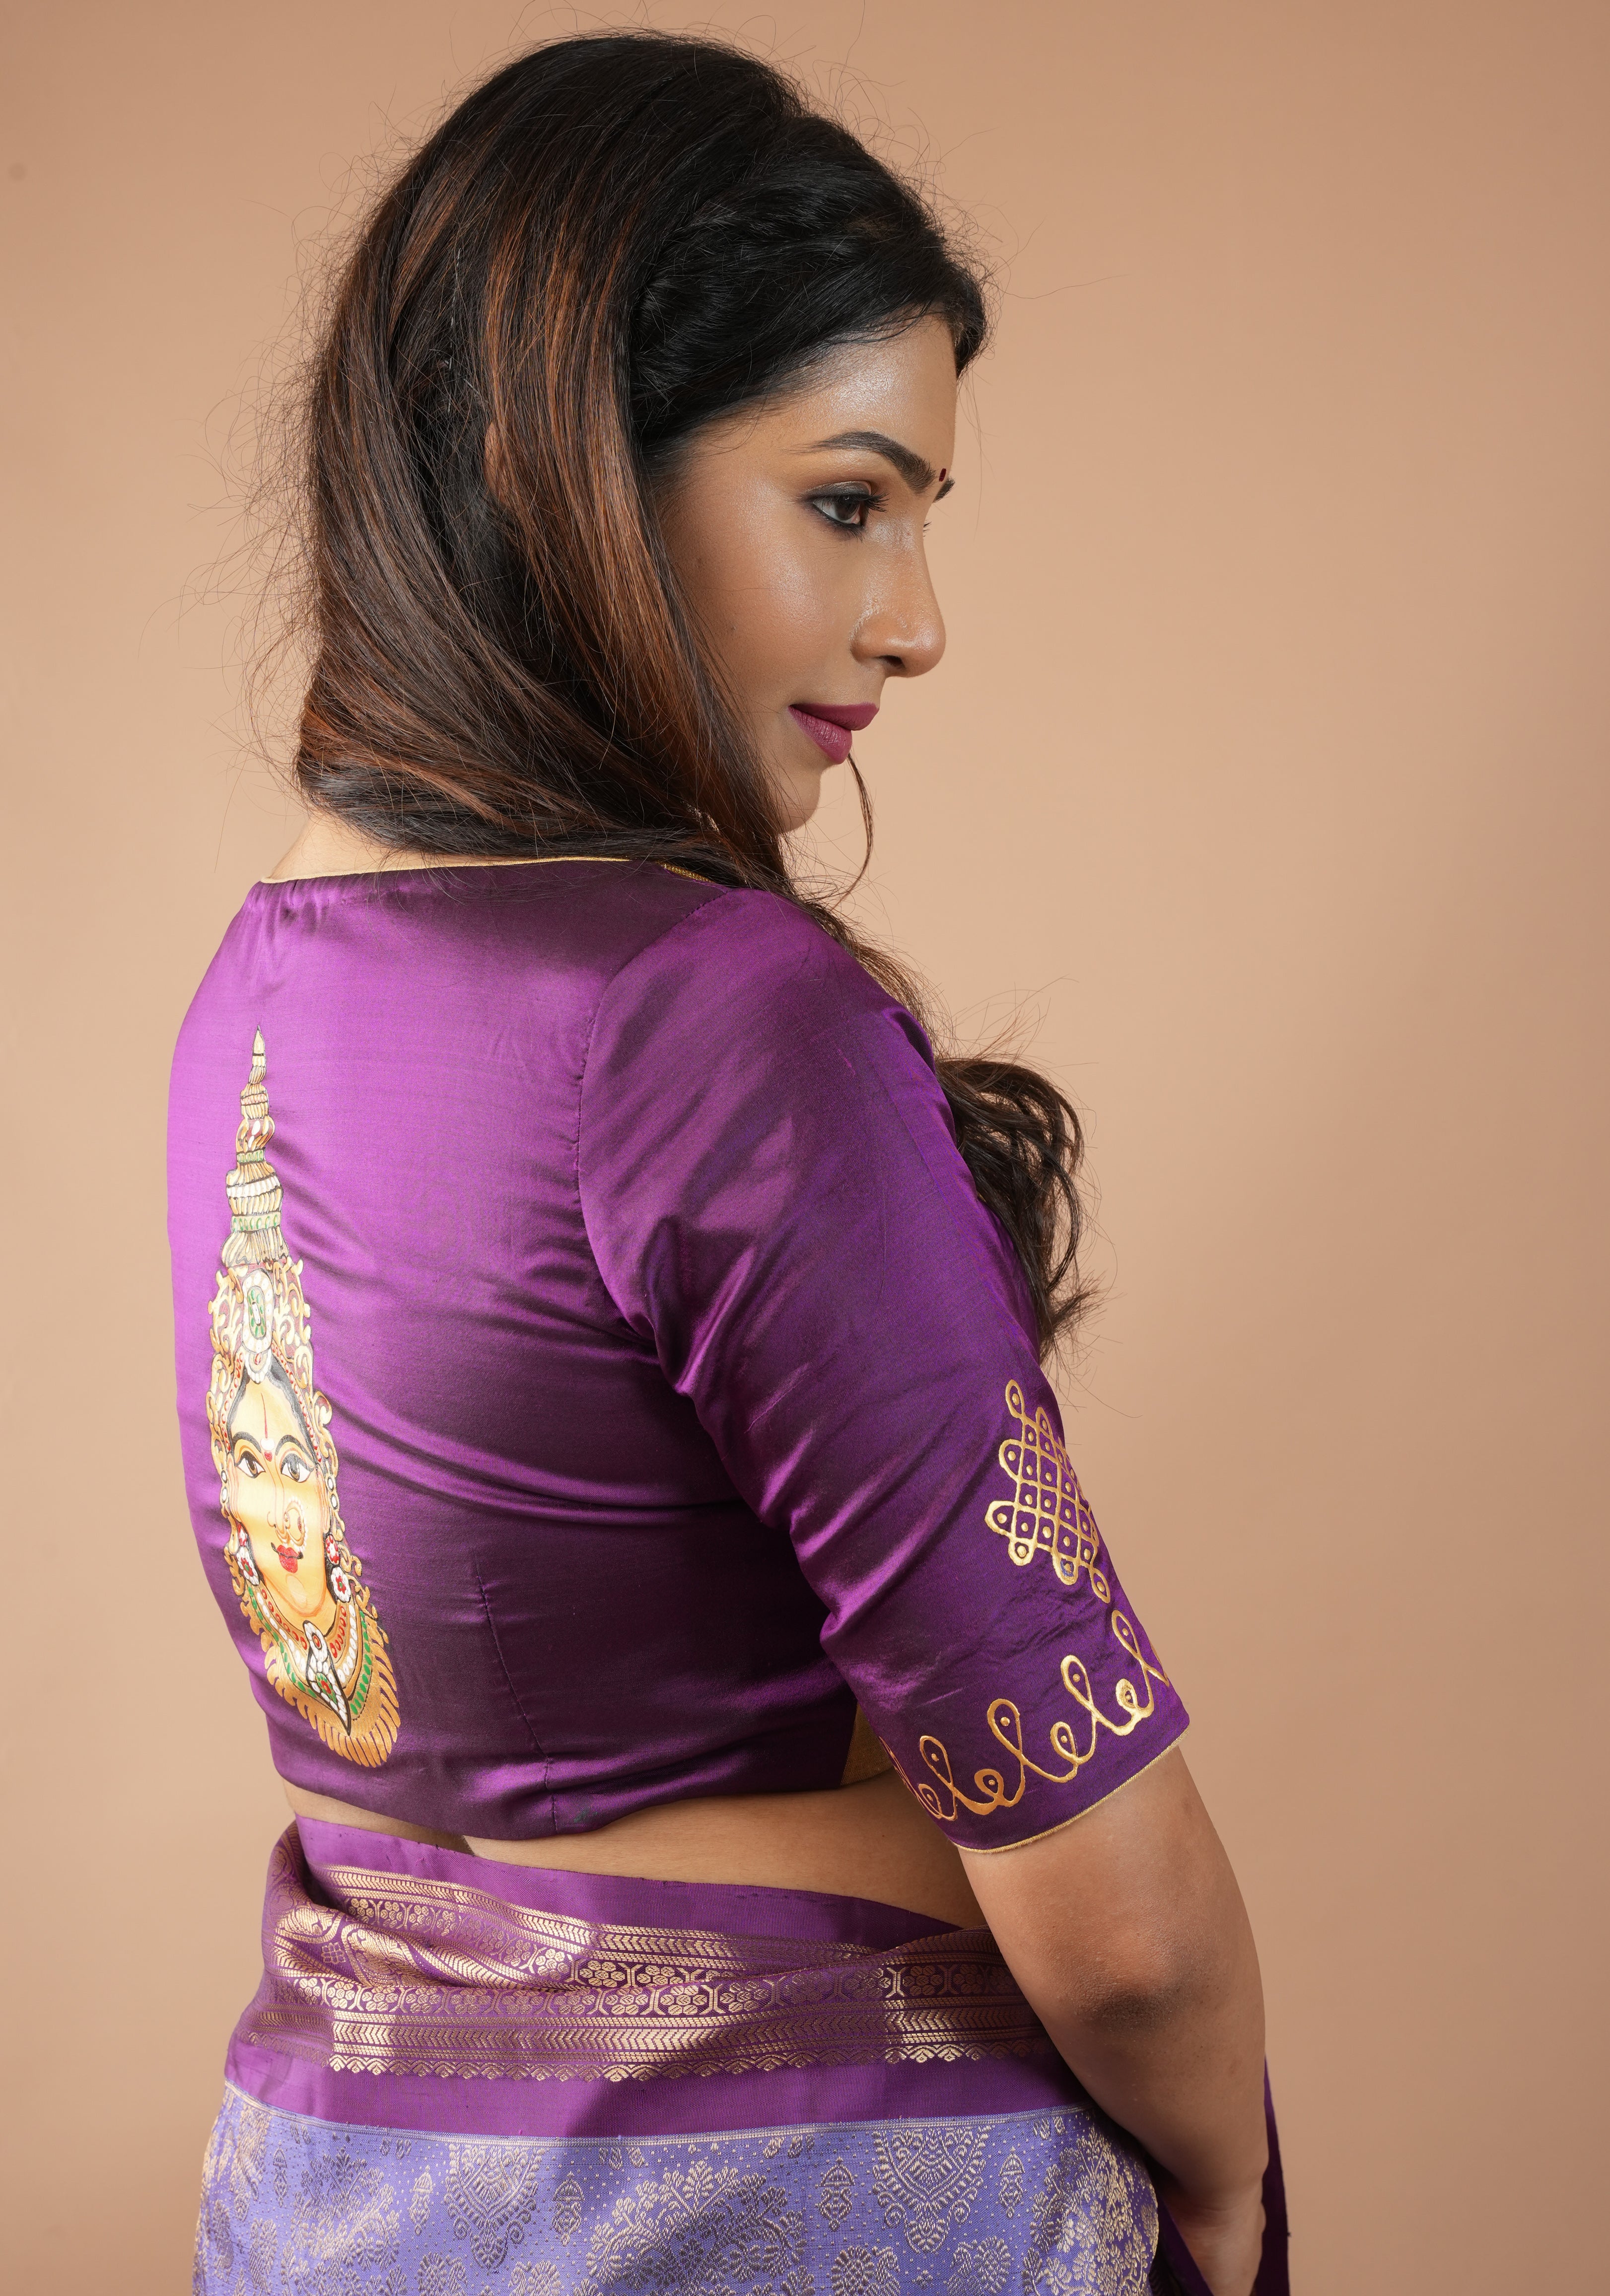 Varalakshmi Face Tanjore Handpainting on Purple Pure Silk Blouse, Made to Order, Customizable